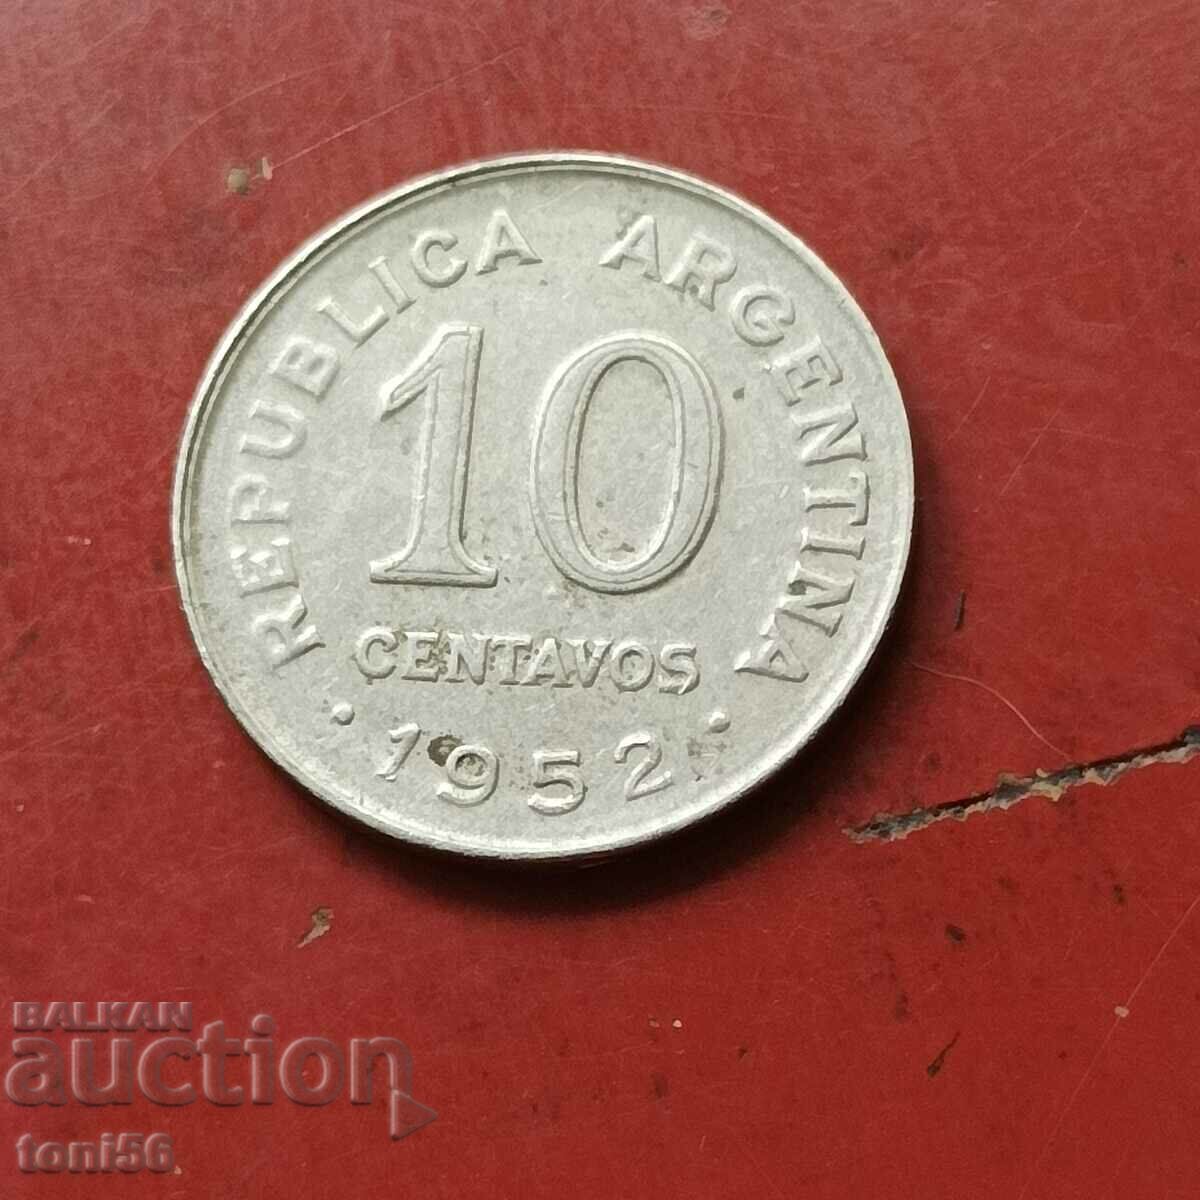 Argentina 10 centavos 1952 - Ch. gurt, magnetic